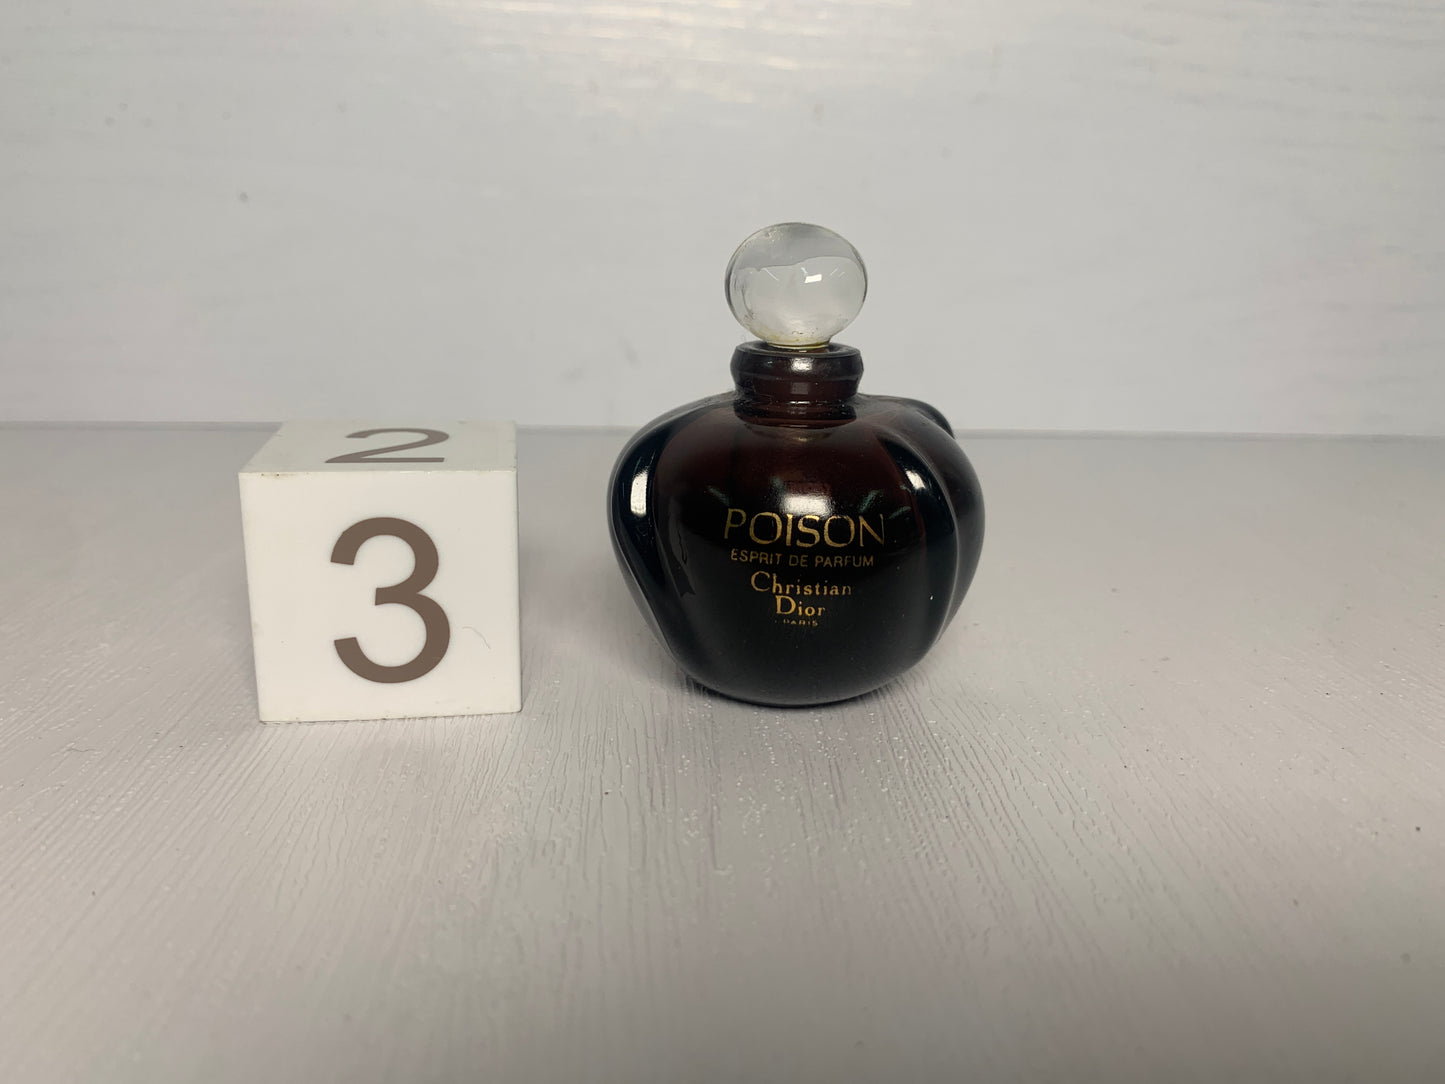 Rare Chrisitian Dior100ml 50ml EDT perfume parfum - 18OCT